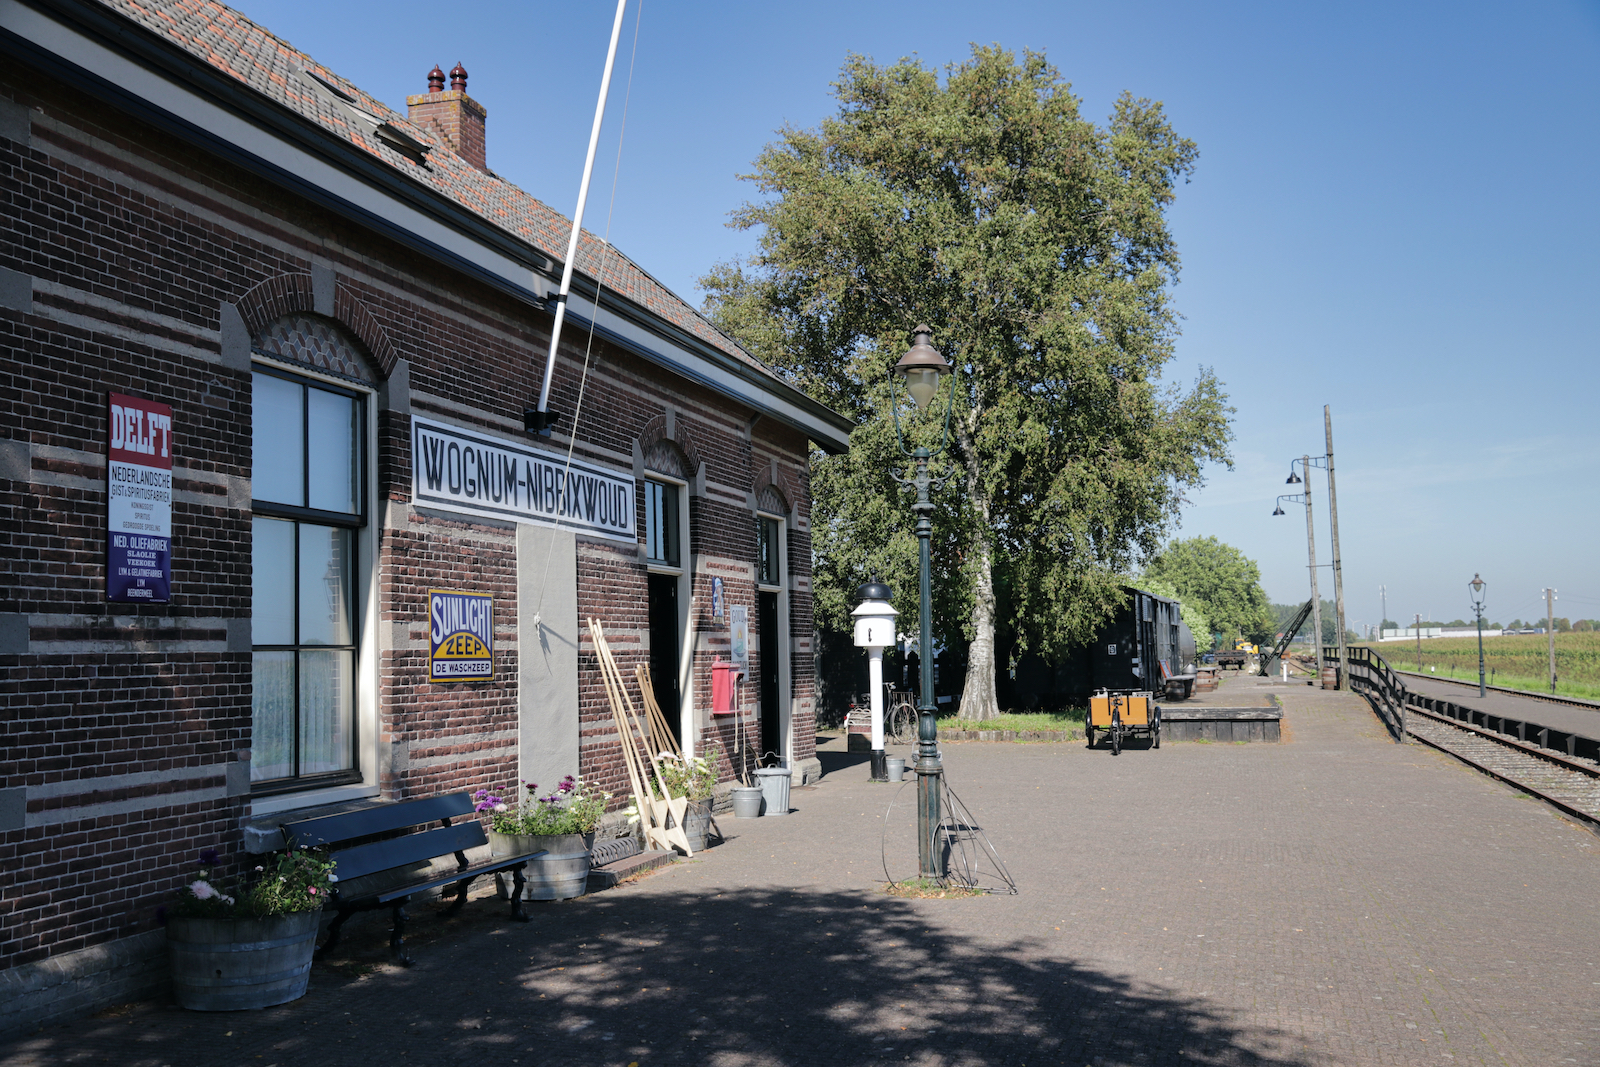 Historic trainstation Wognum-Nibbixwoud